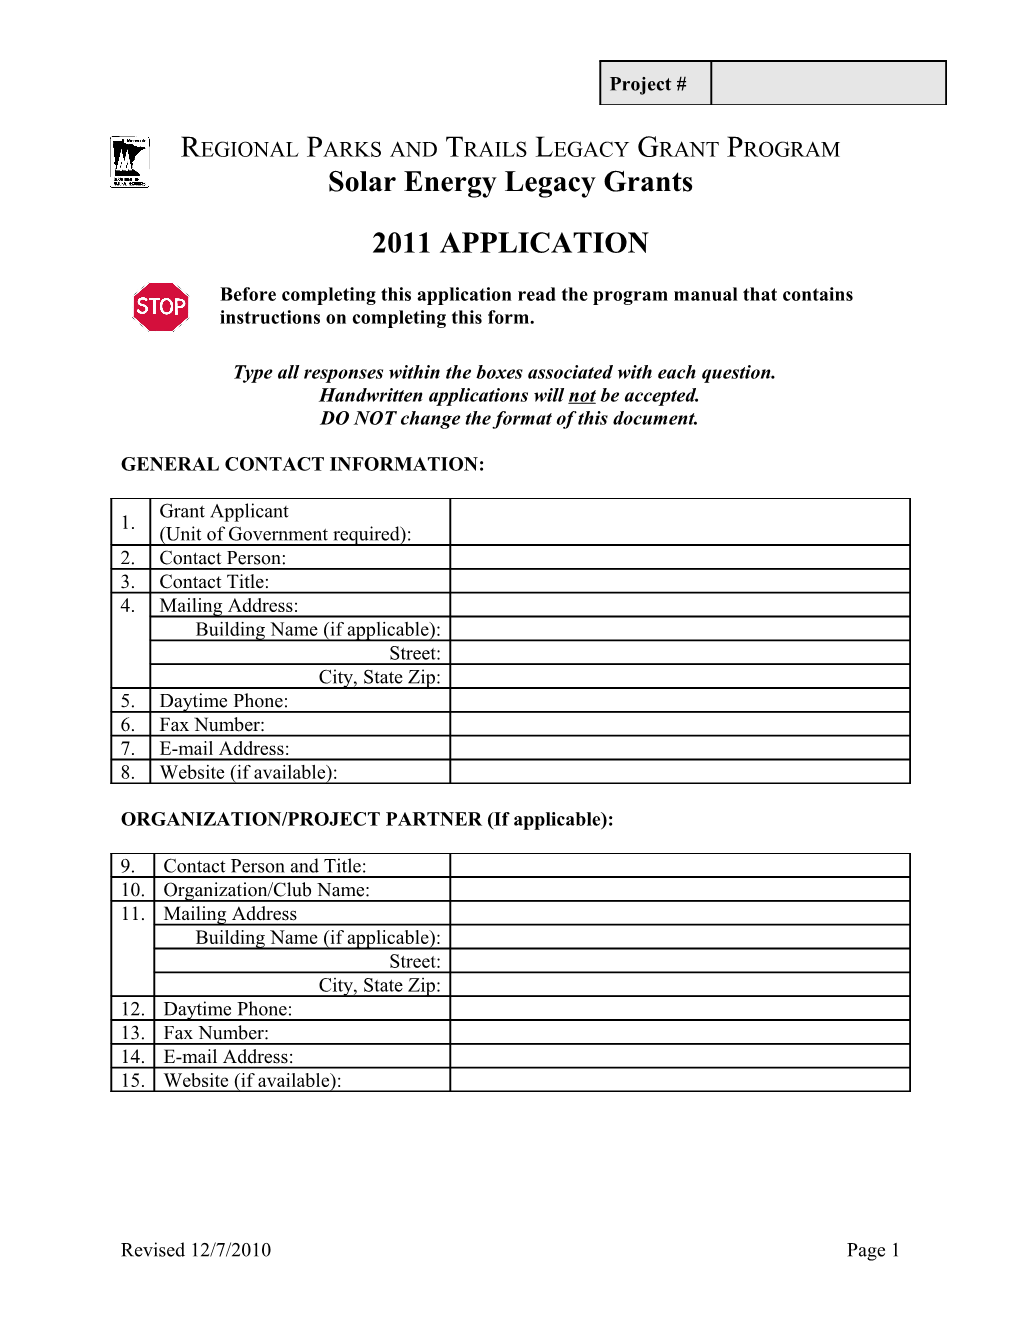 Solar Energy Legacy Grant Program Application